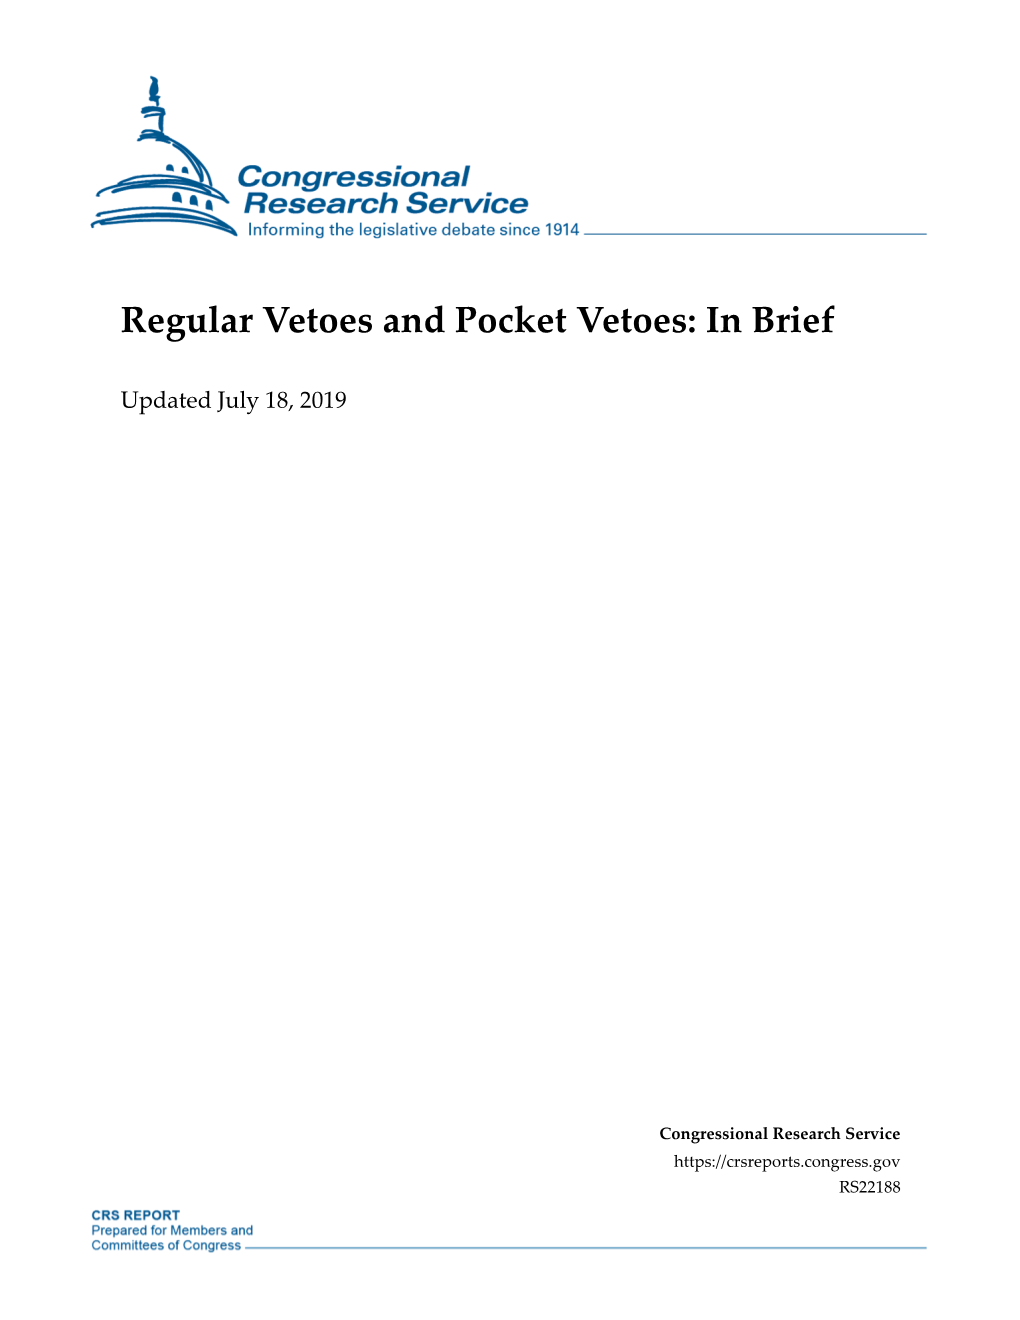 Regular Vetoes and Pocket Vetoes: in Brief